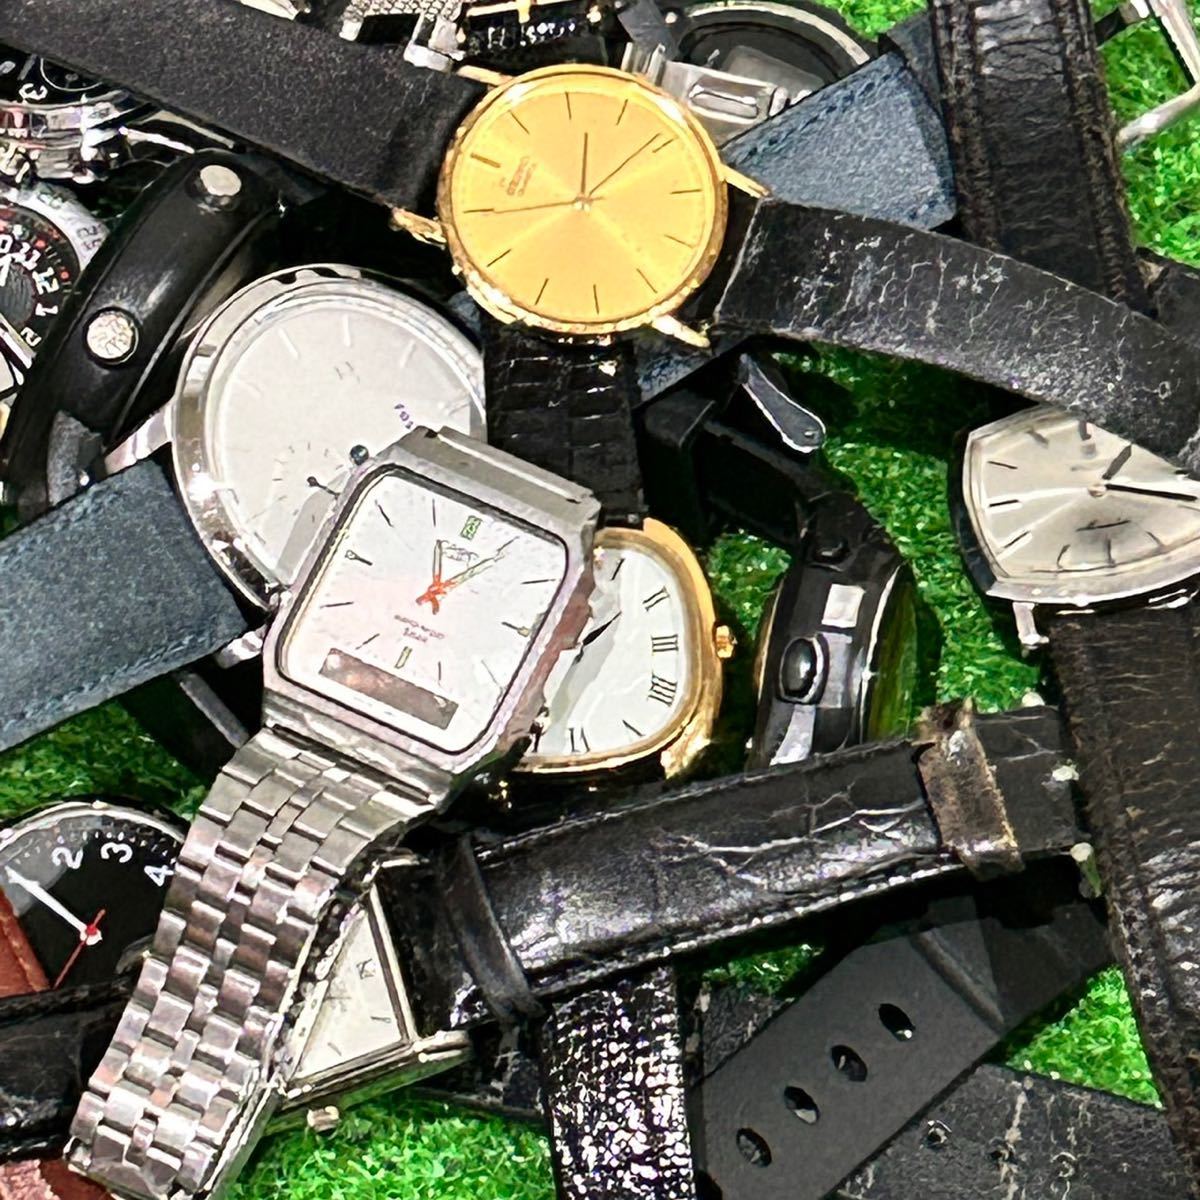 SEIKO セイコー Lassale ラサール CASIO カシオ TECHNOS テクノス など 時計 腕時計 まとめ売り 15本以上 動作未確認 ジャンク品(E323)_画像2